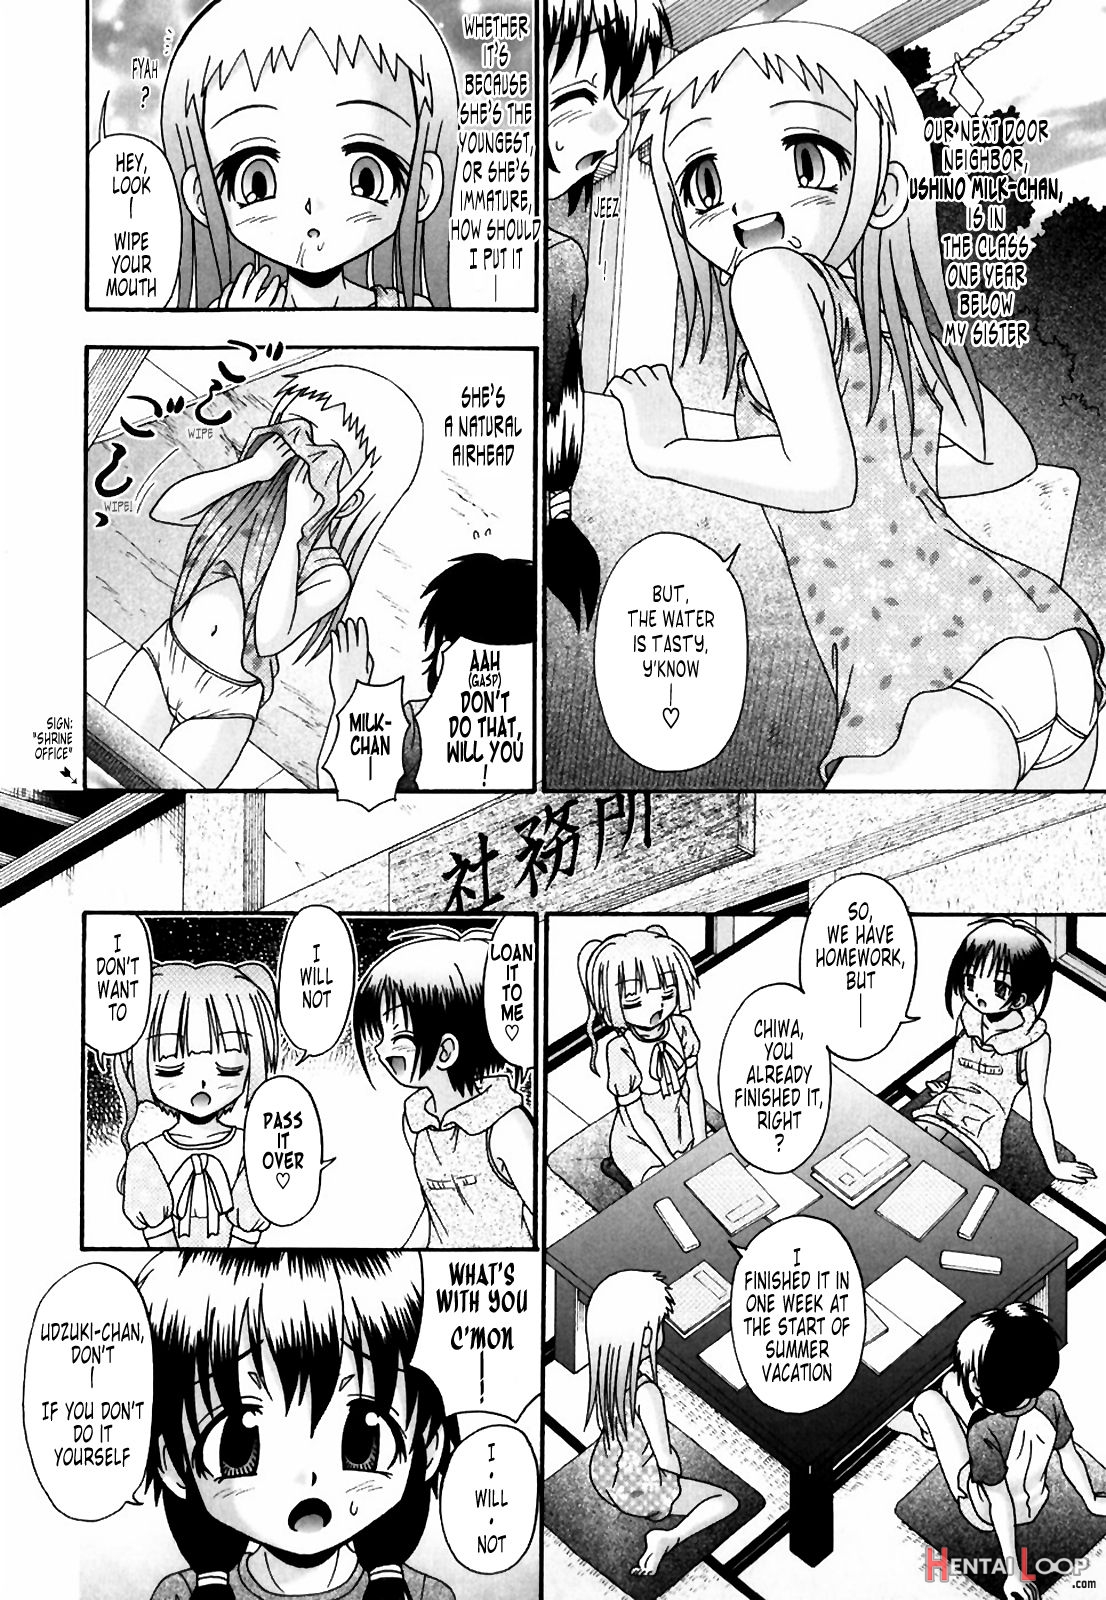 Tsukumimi 1&2 page 14